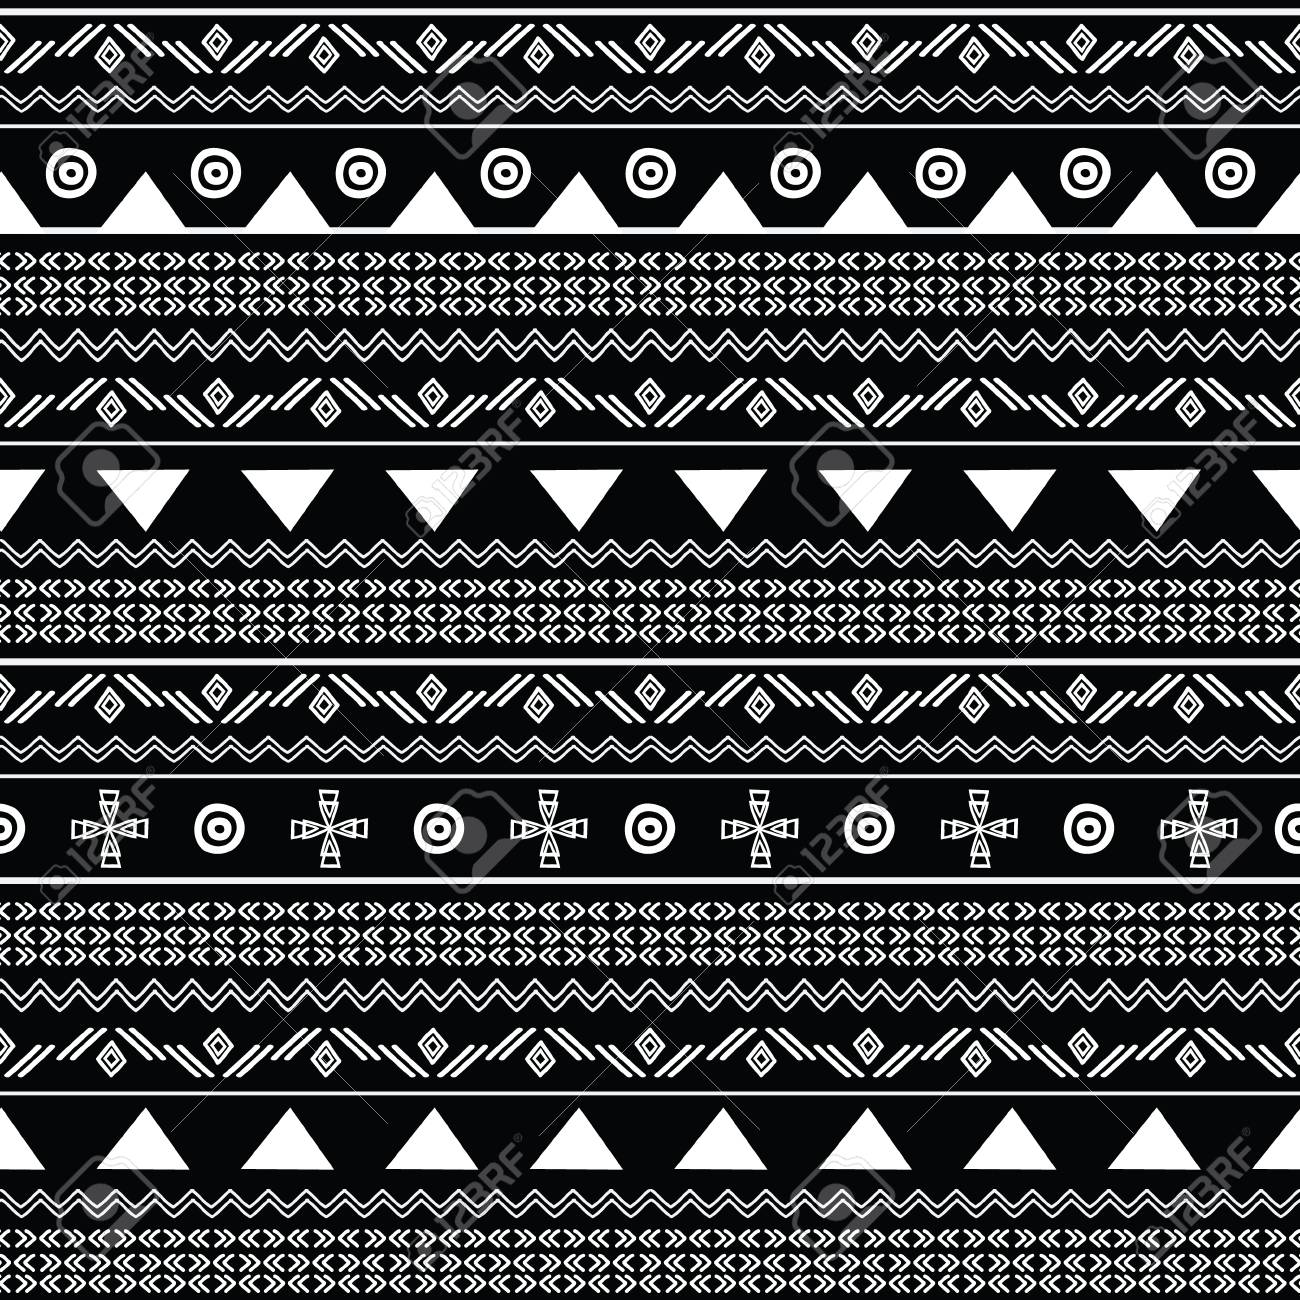 27+] Black and White Tribal Wallpapers - WallpaperSafari